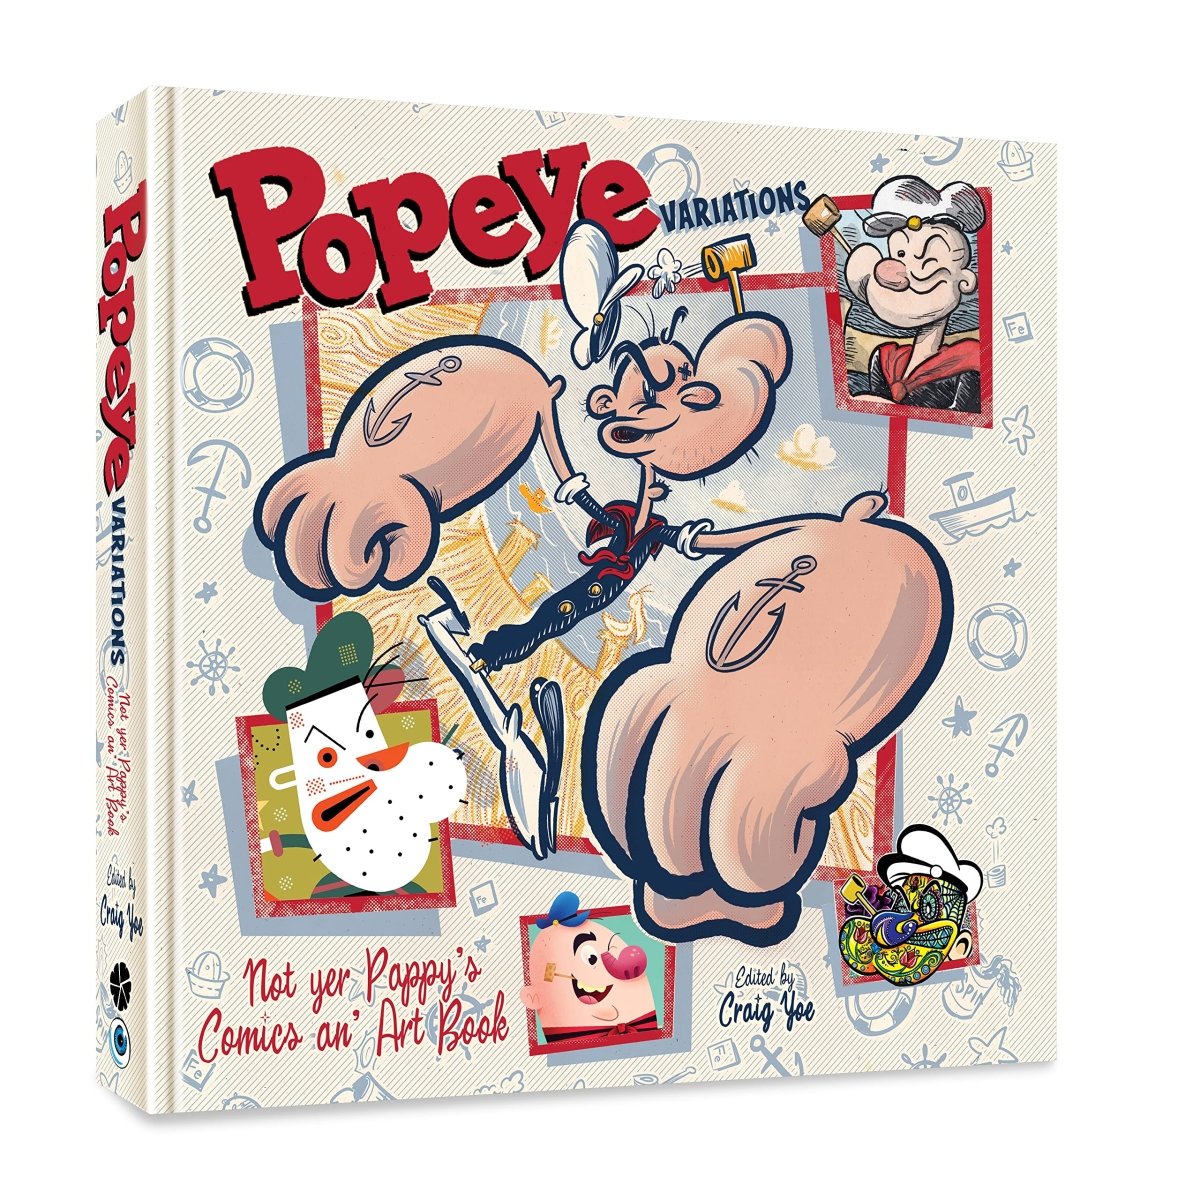 Popeye Variations: Not Yer Pappy's Comics An' Art Book HC - Walt's Comic Shop